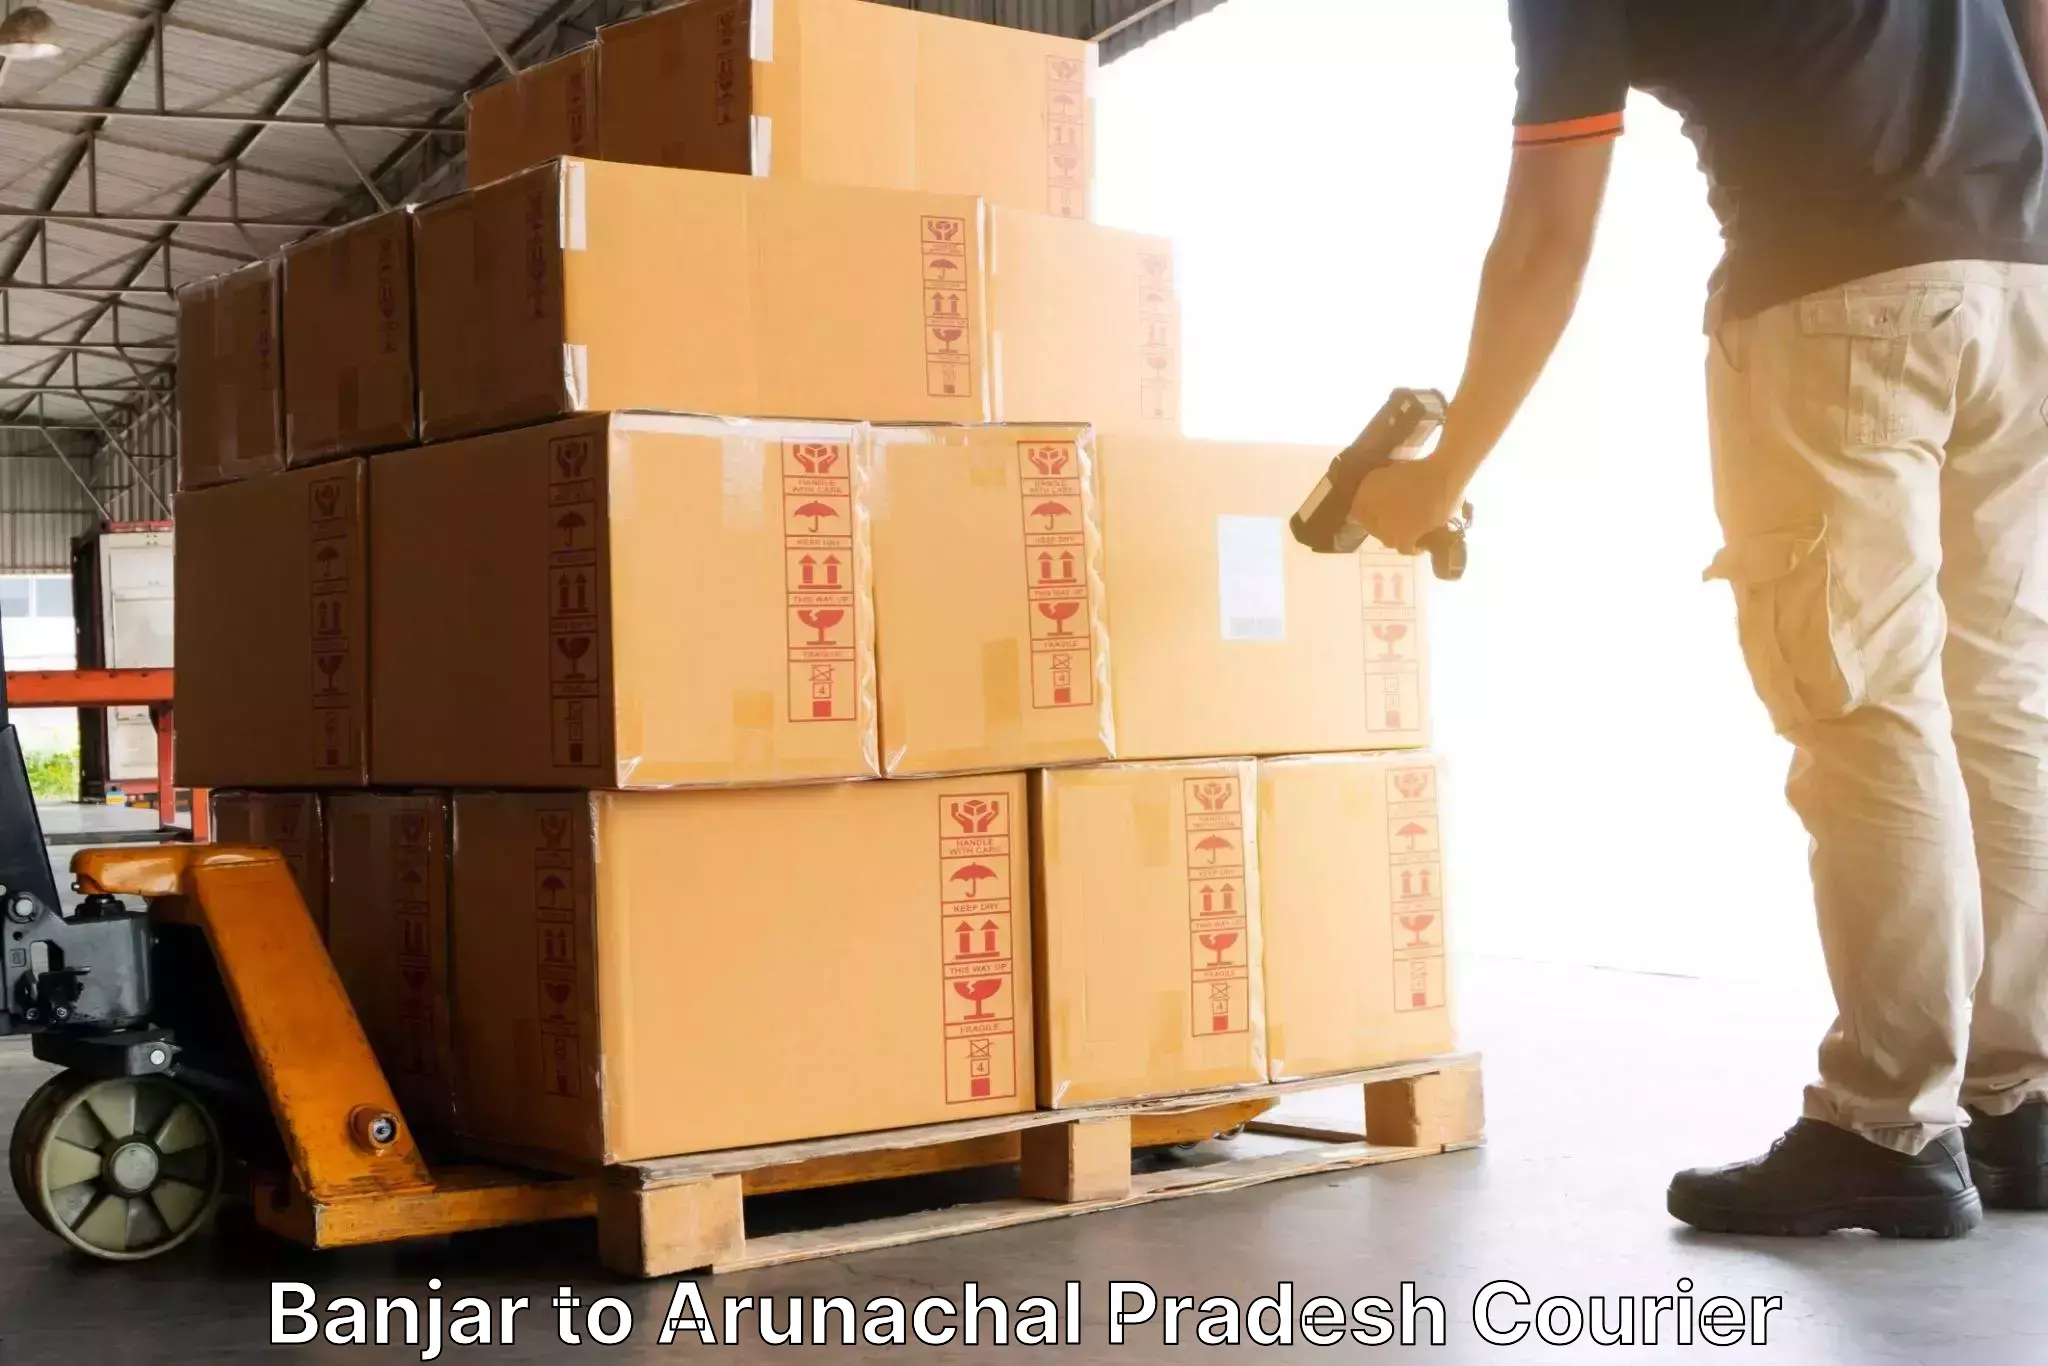 Courier service booking Banjar to Arunachal Pradesh